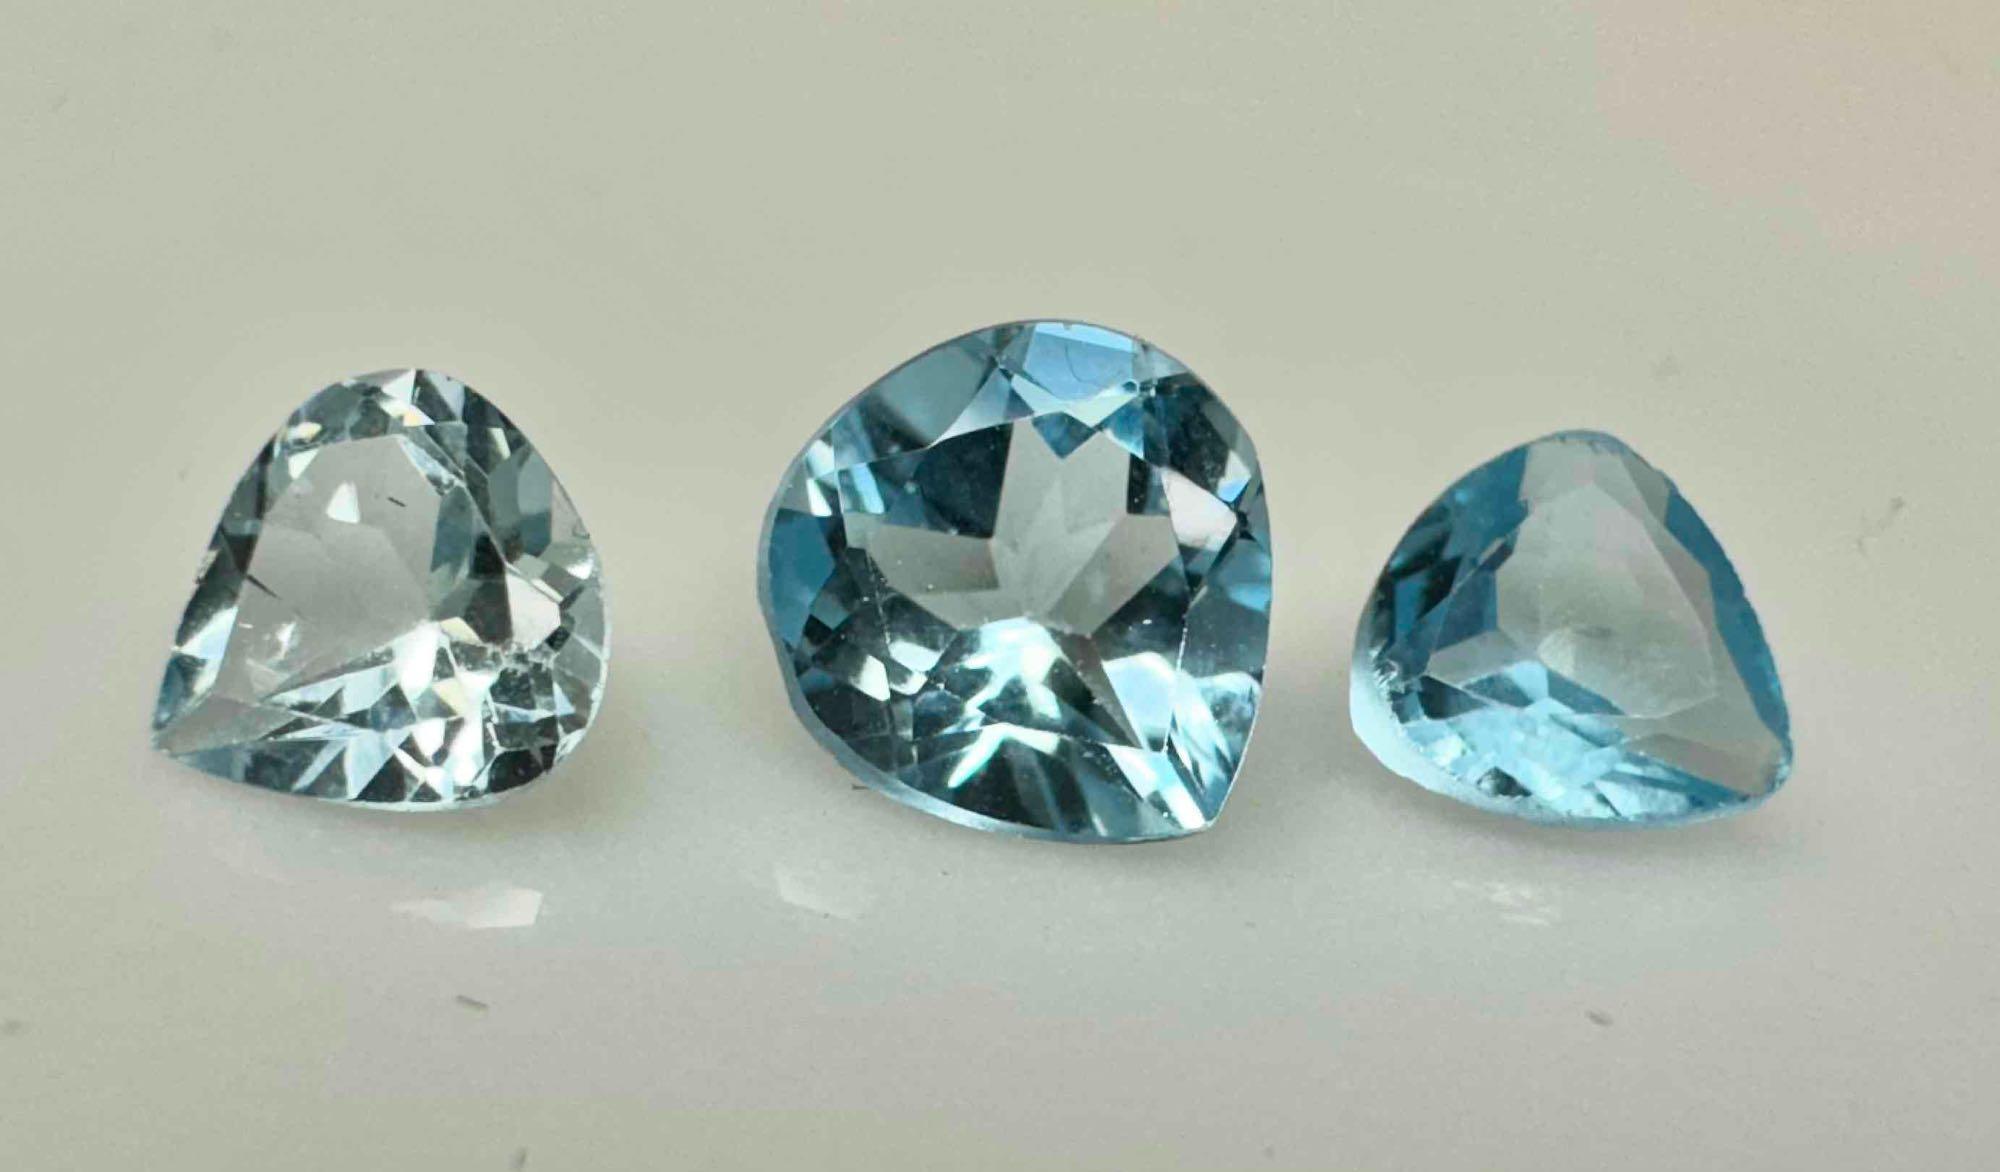 3 Trillion Cut Topaz Gemstones 3.2ct total